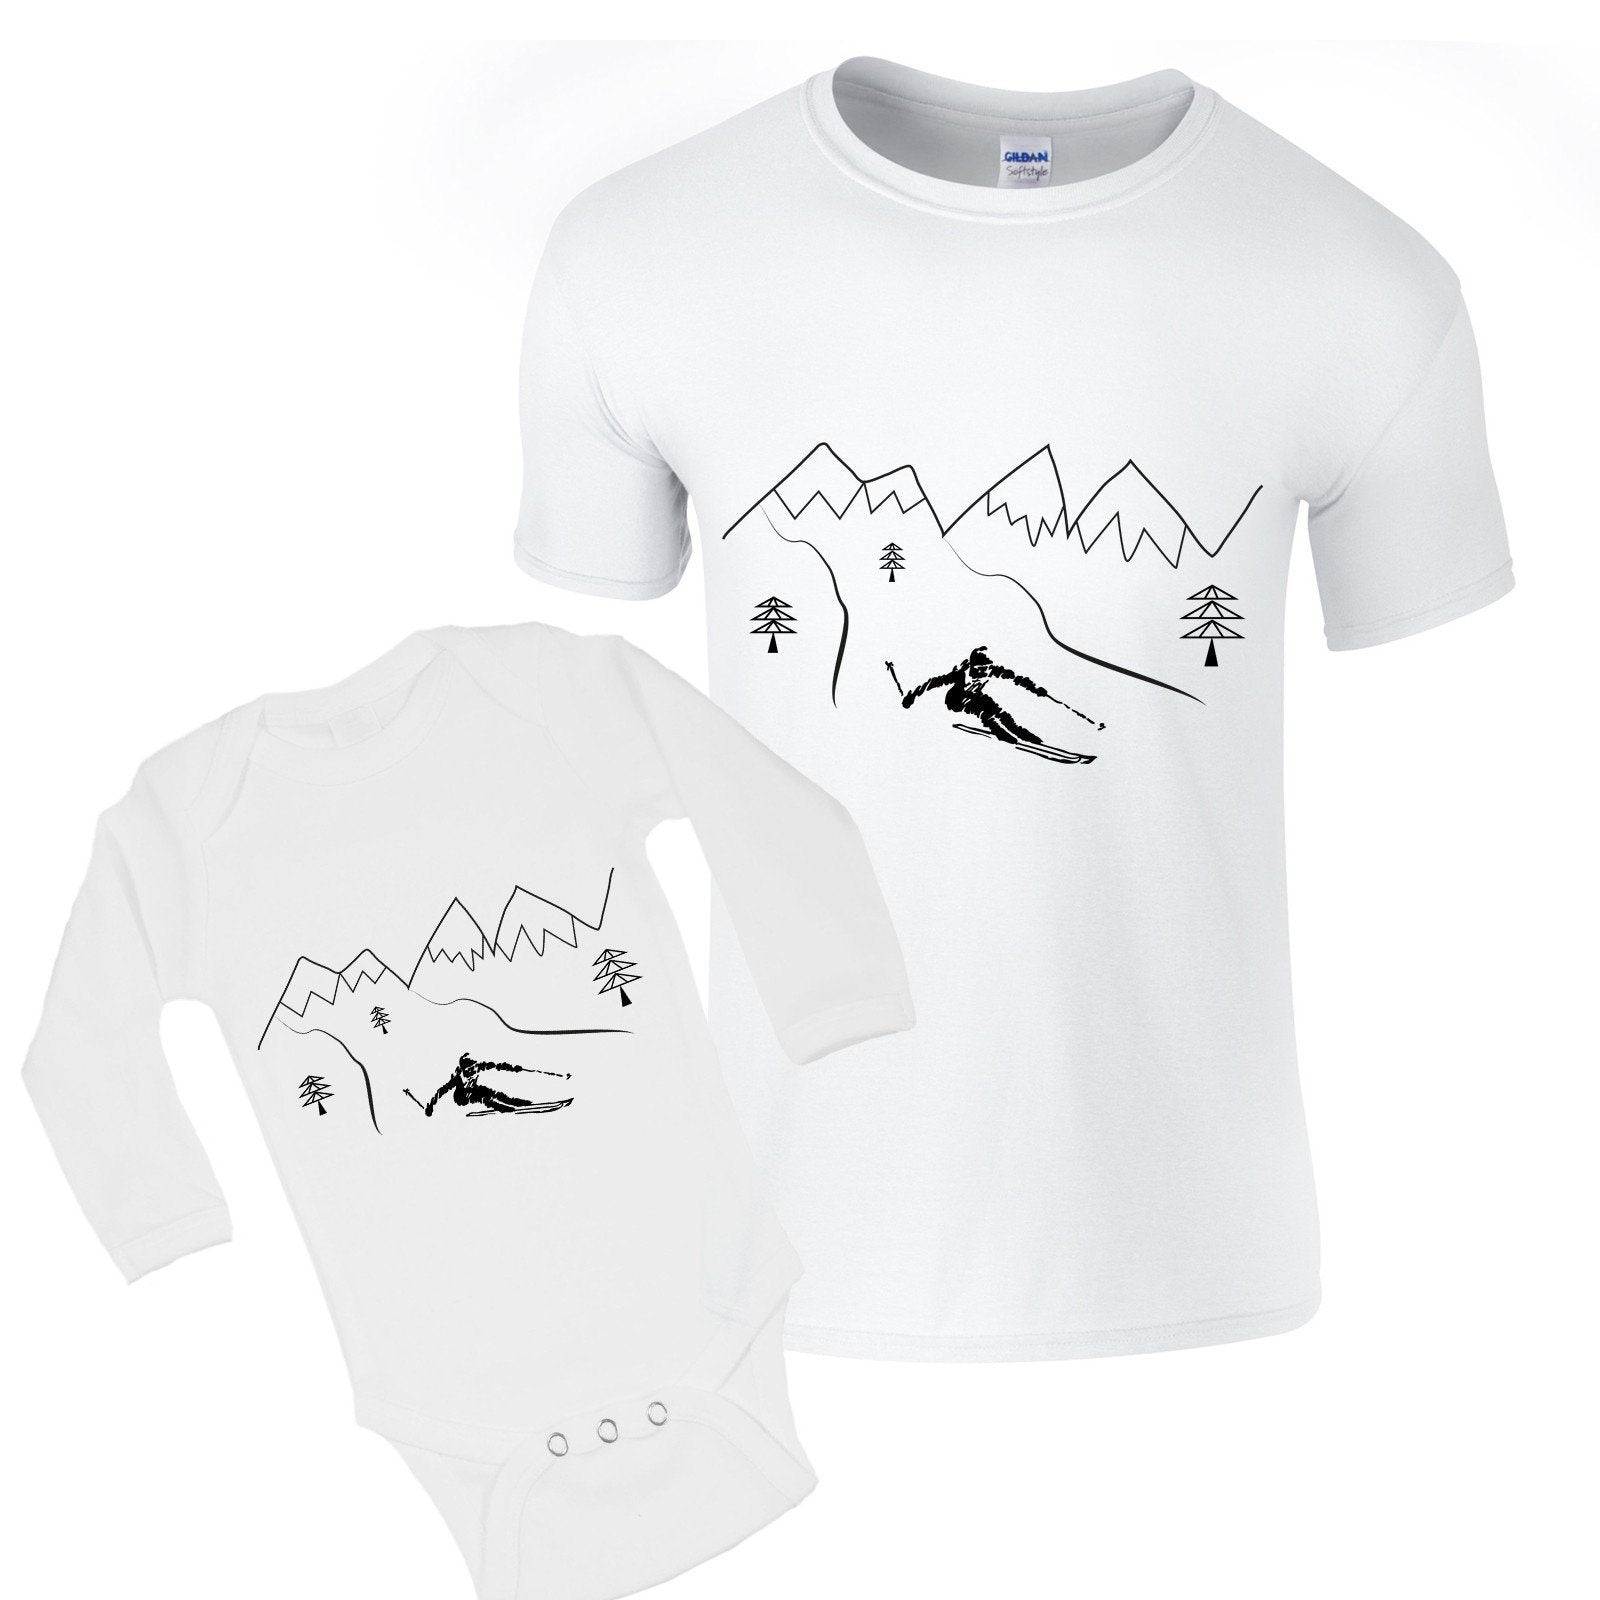 T-shirts - Skiing Matching Baby Daddy Shirts